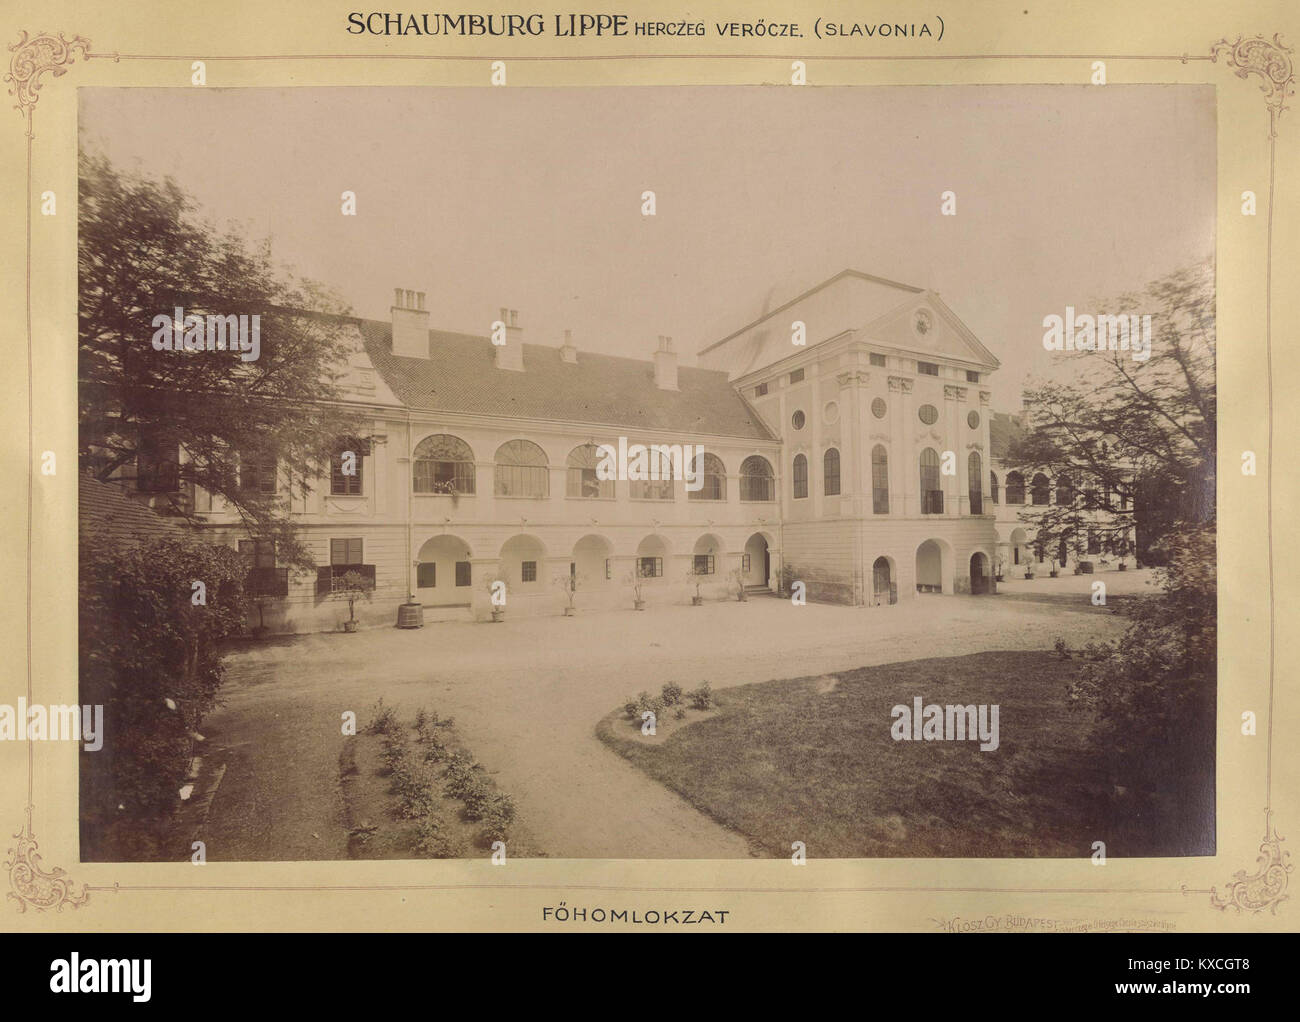 Verőce, Kroatien. Ein pejačević - kastély főhomlokzata között, 1895-1899. - Fortepan 83105 Stockfoto